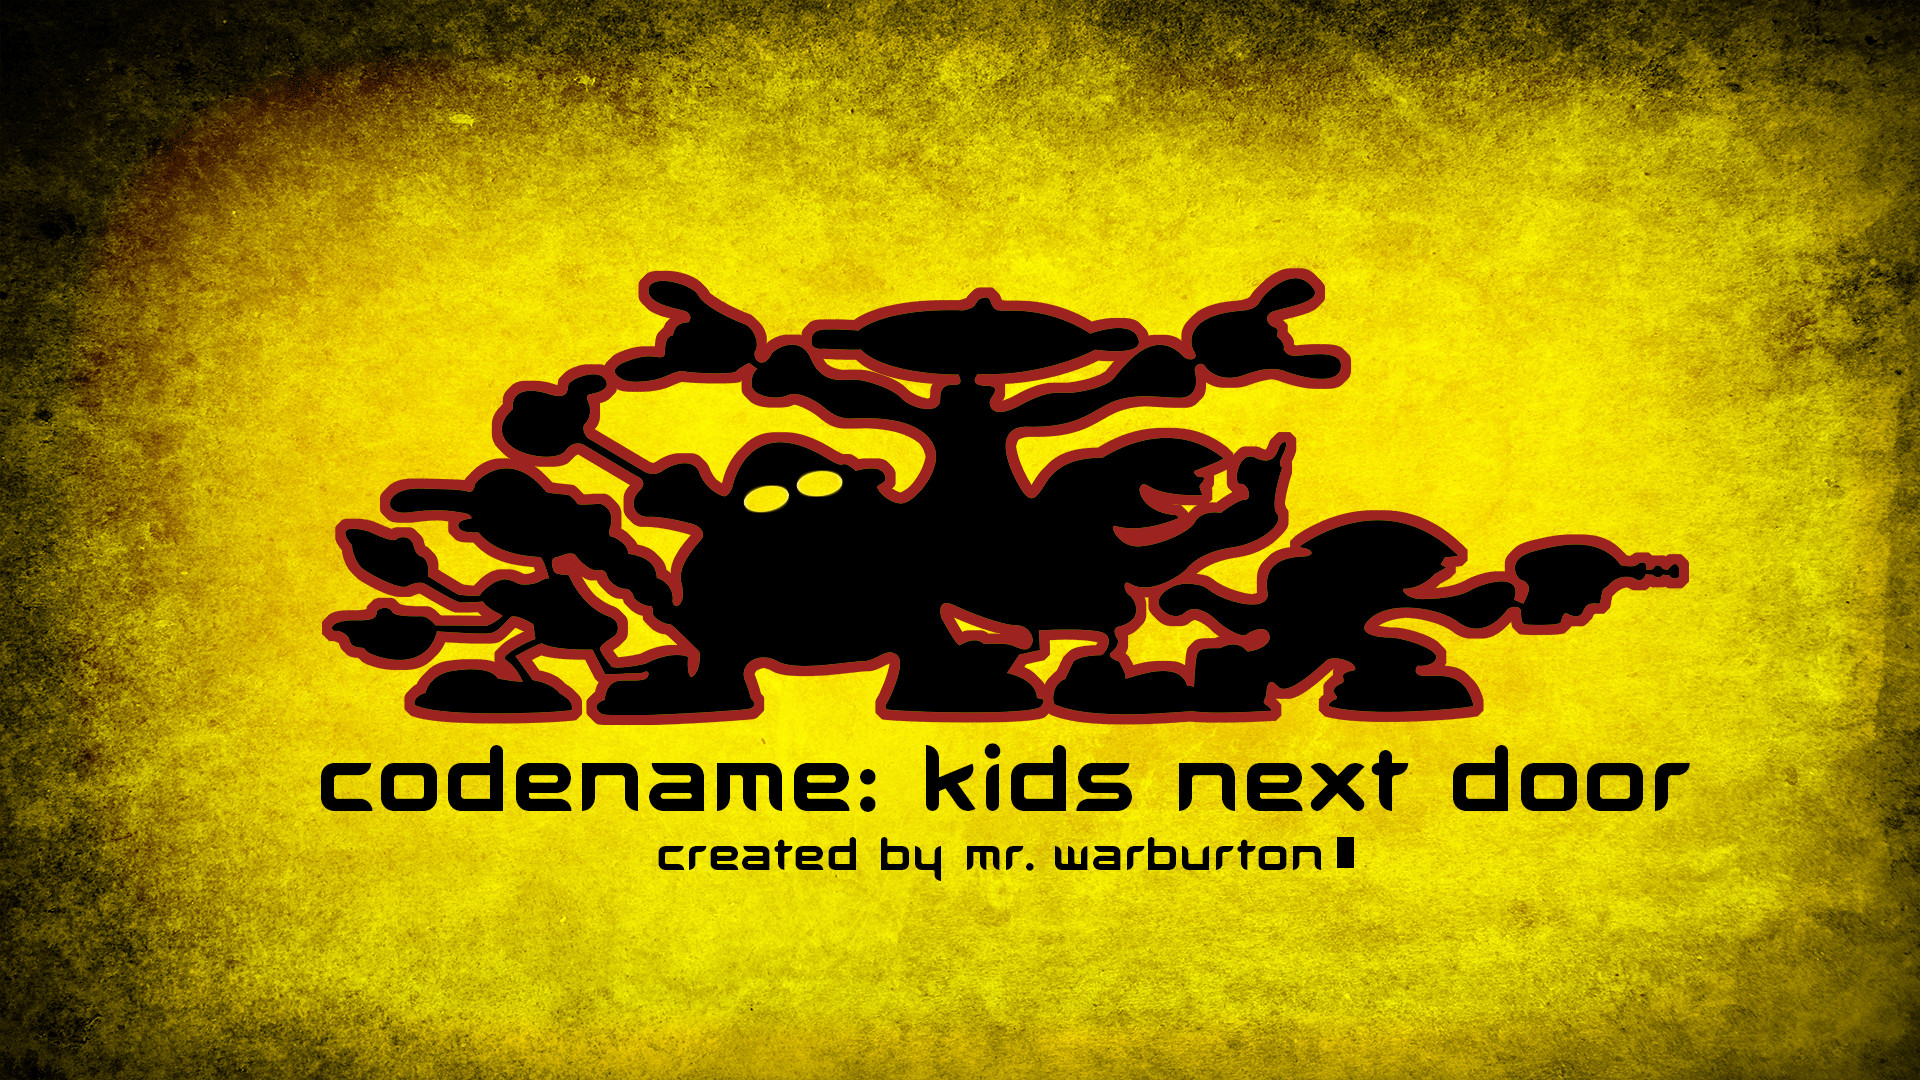 1920x1080 WP Codename Kids Next Door by UtterlyLudicrous 